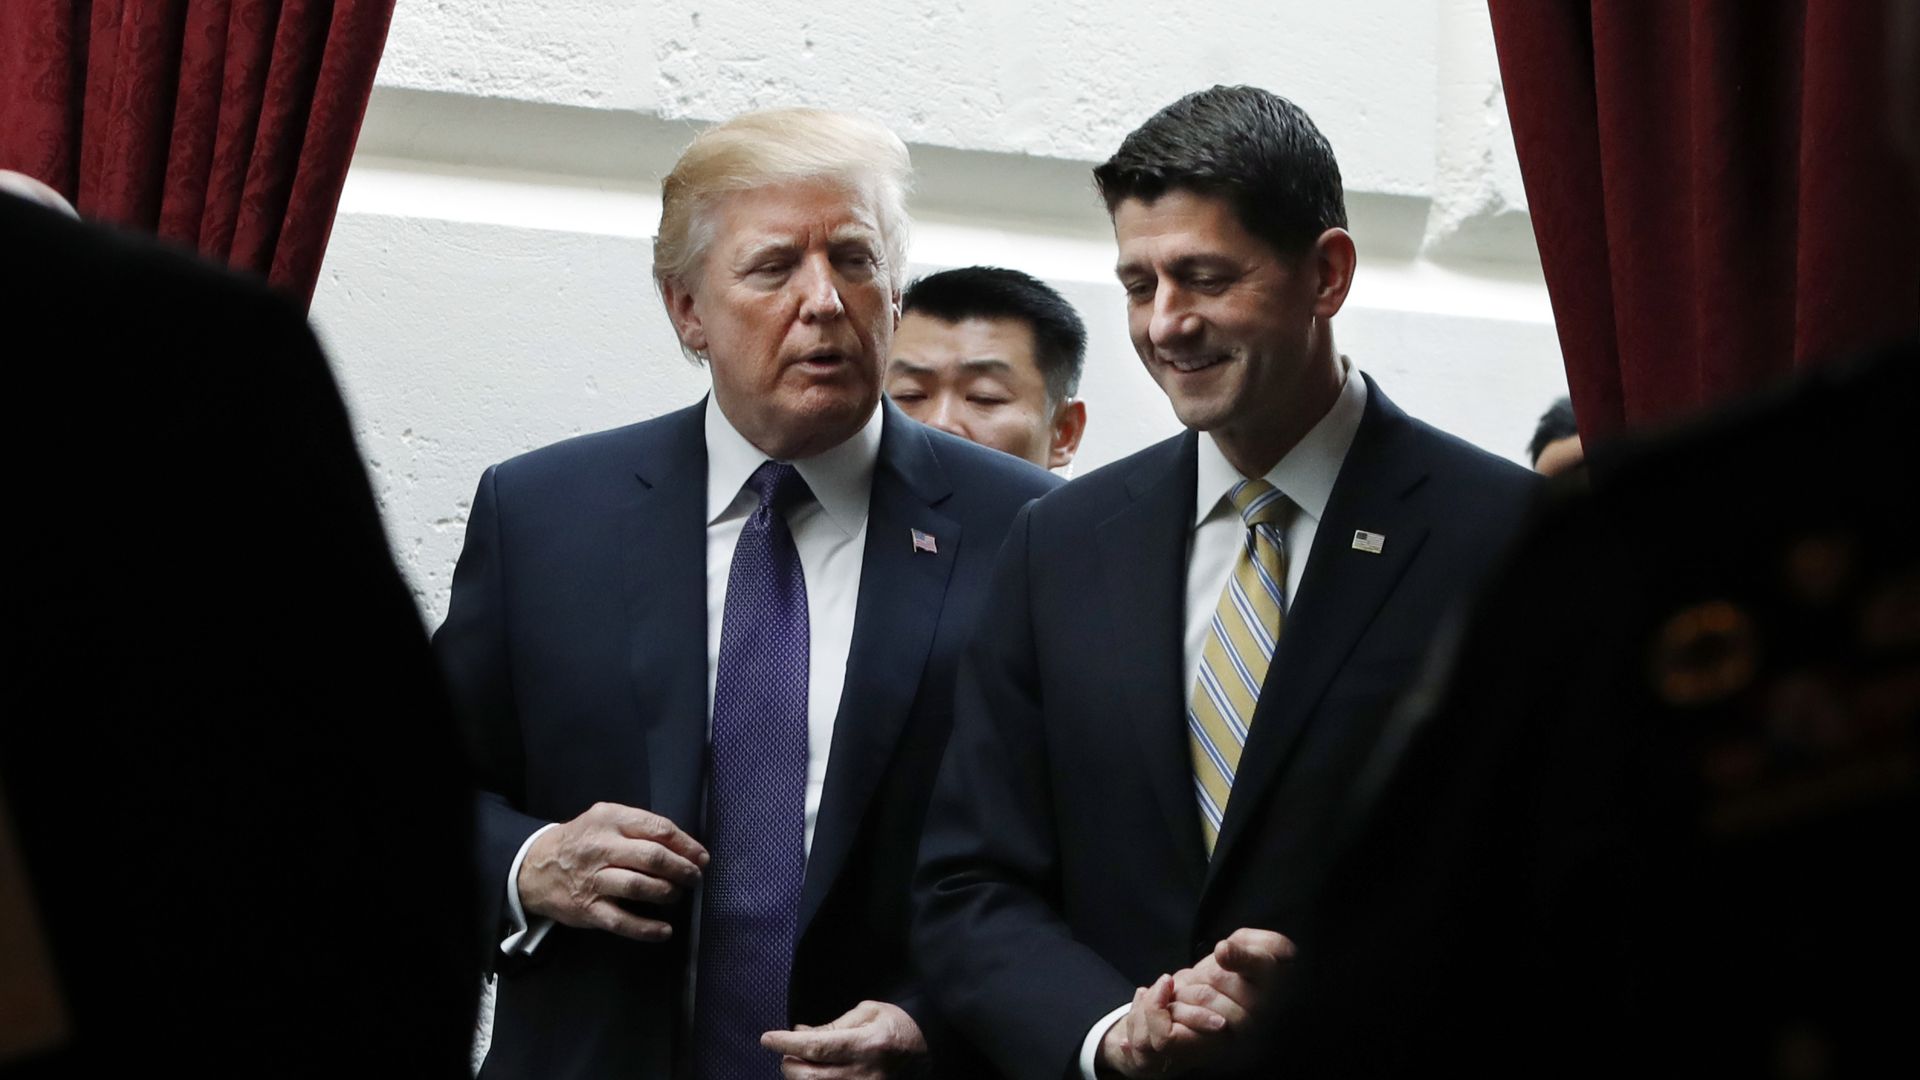 President Donald Trump walks with House Speaker Paul Ryan. 